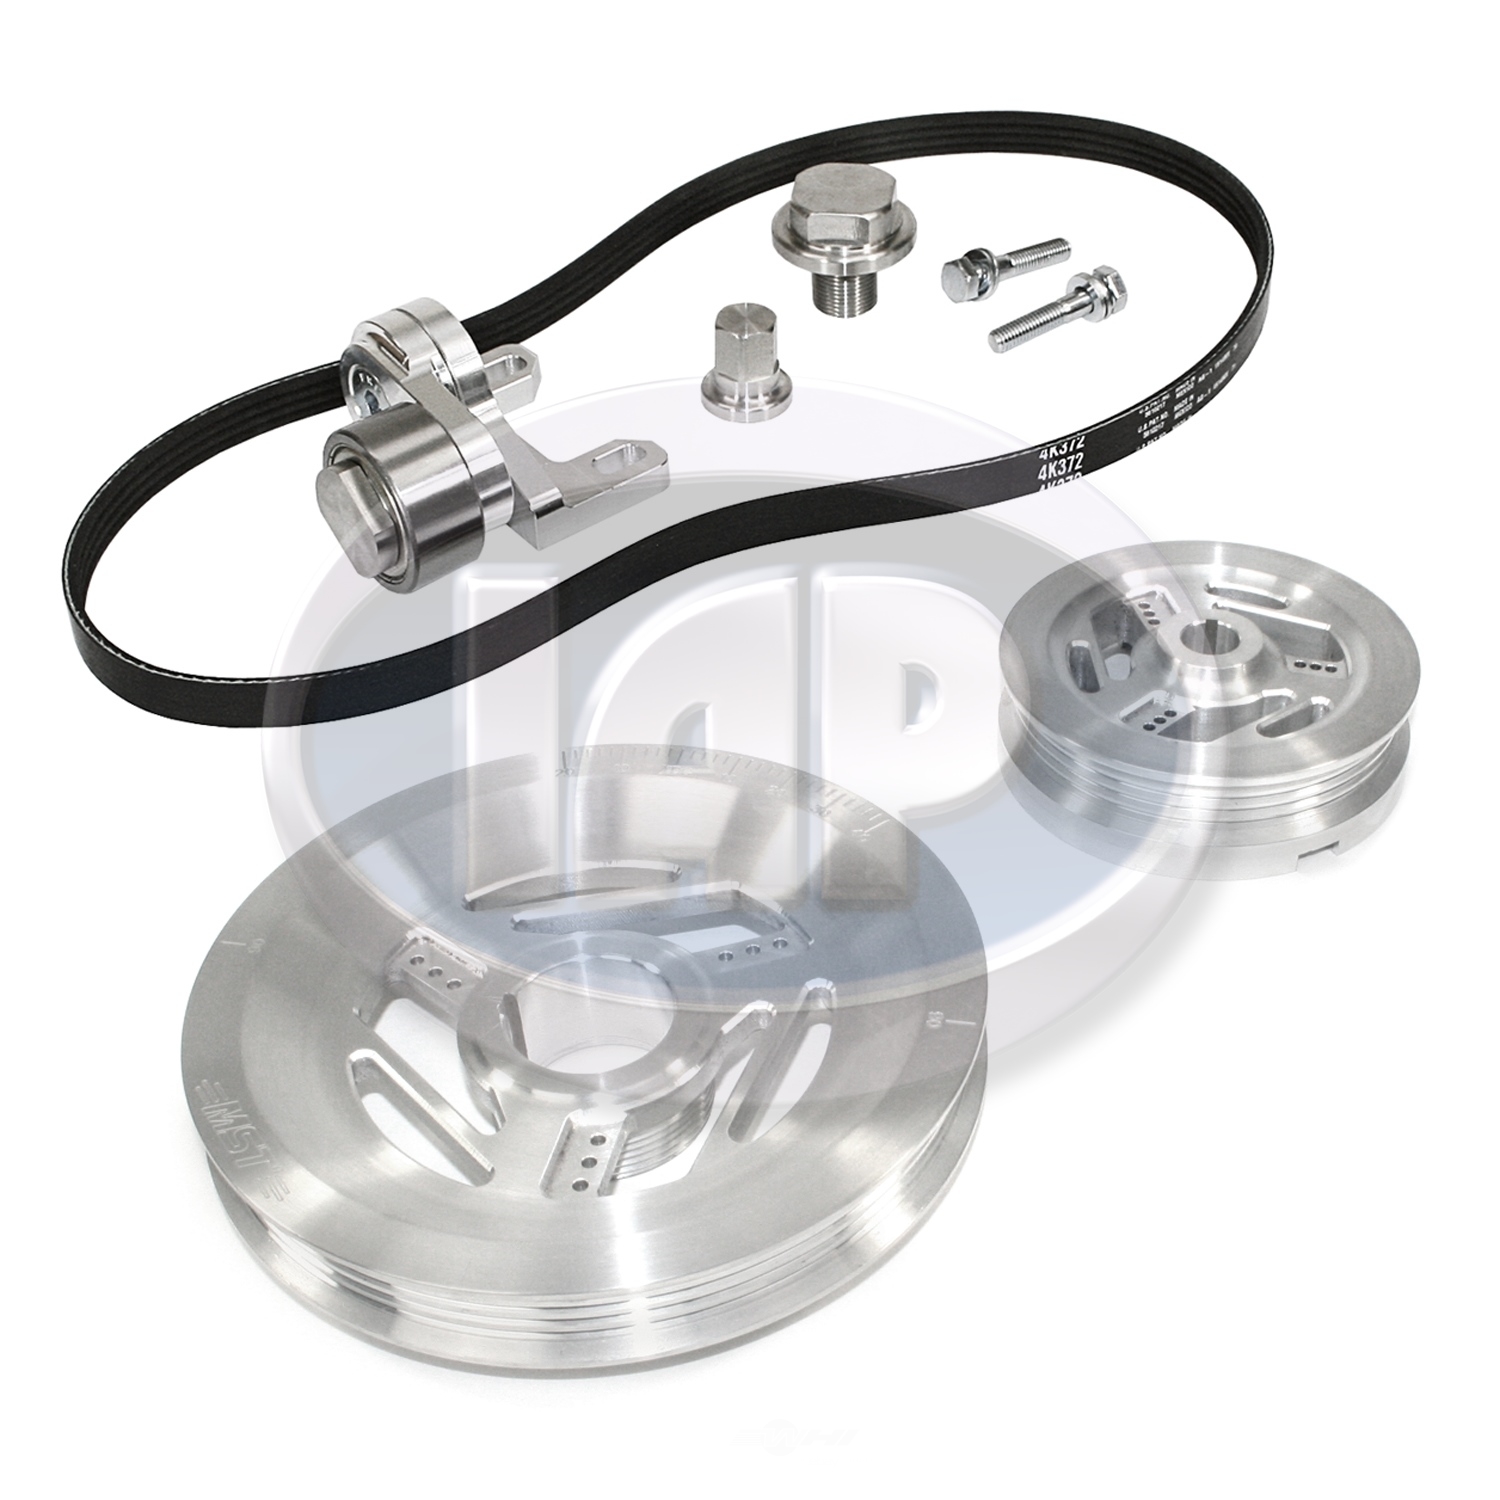 IAP/KUHLTEK MOTORWERKS - Serpentine Belt Drive Component Kit (Fan and Alternator) - KMS M10400400